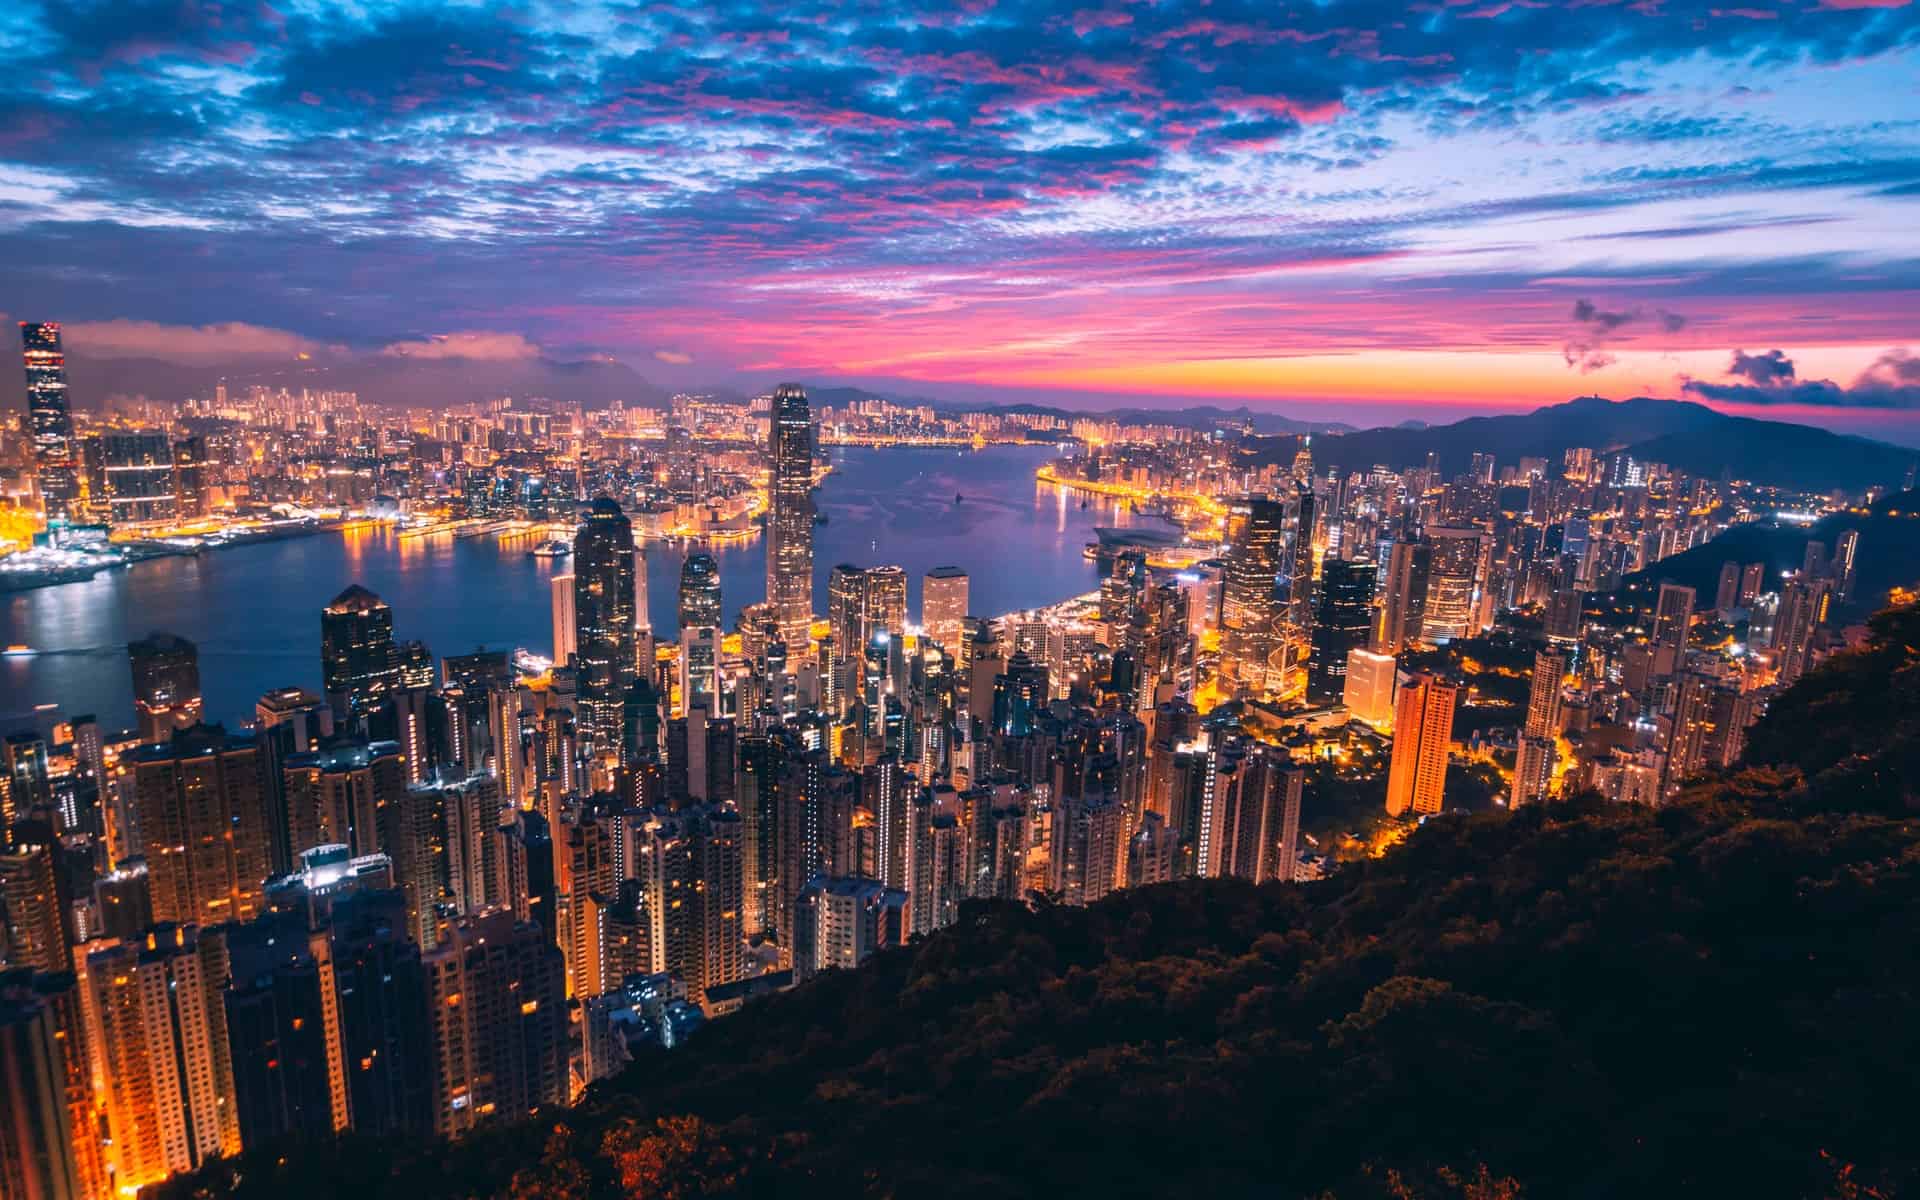 Best things to do in Hong Kong - Sarah Li Cain - skyline by Simon Zhu on Unsplash